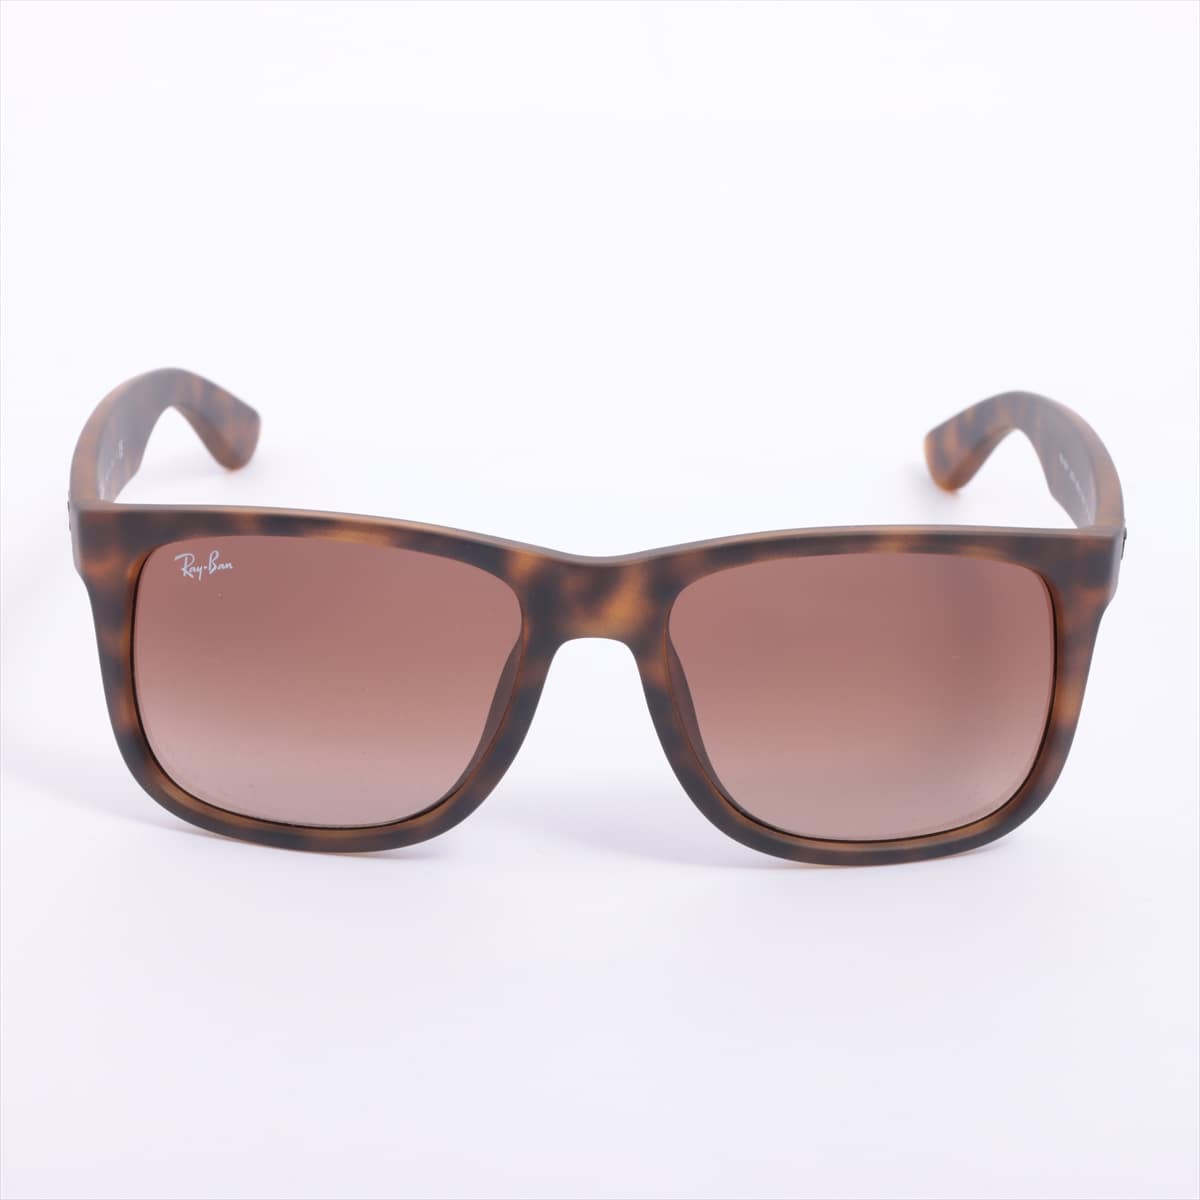 Ray-Ban Sunglasses Plastic Brown